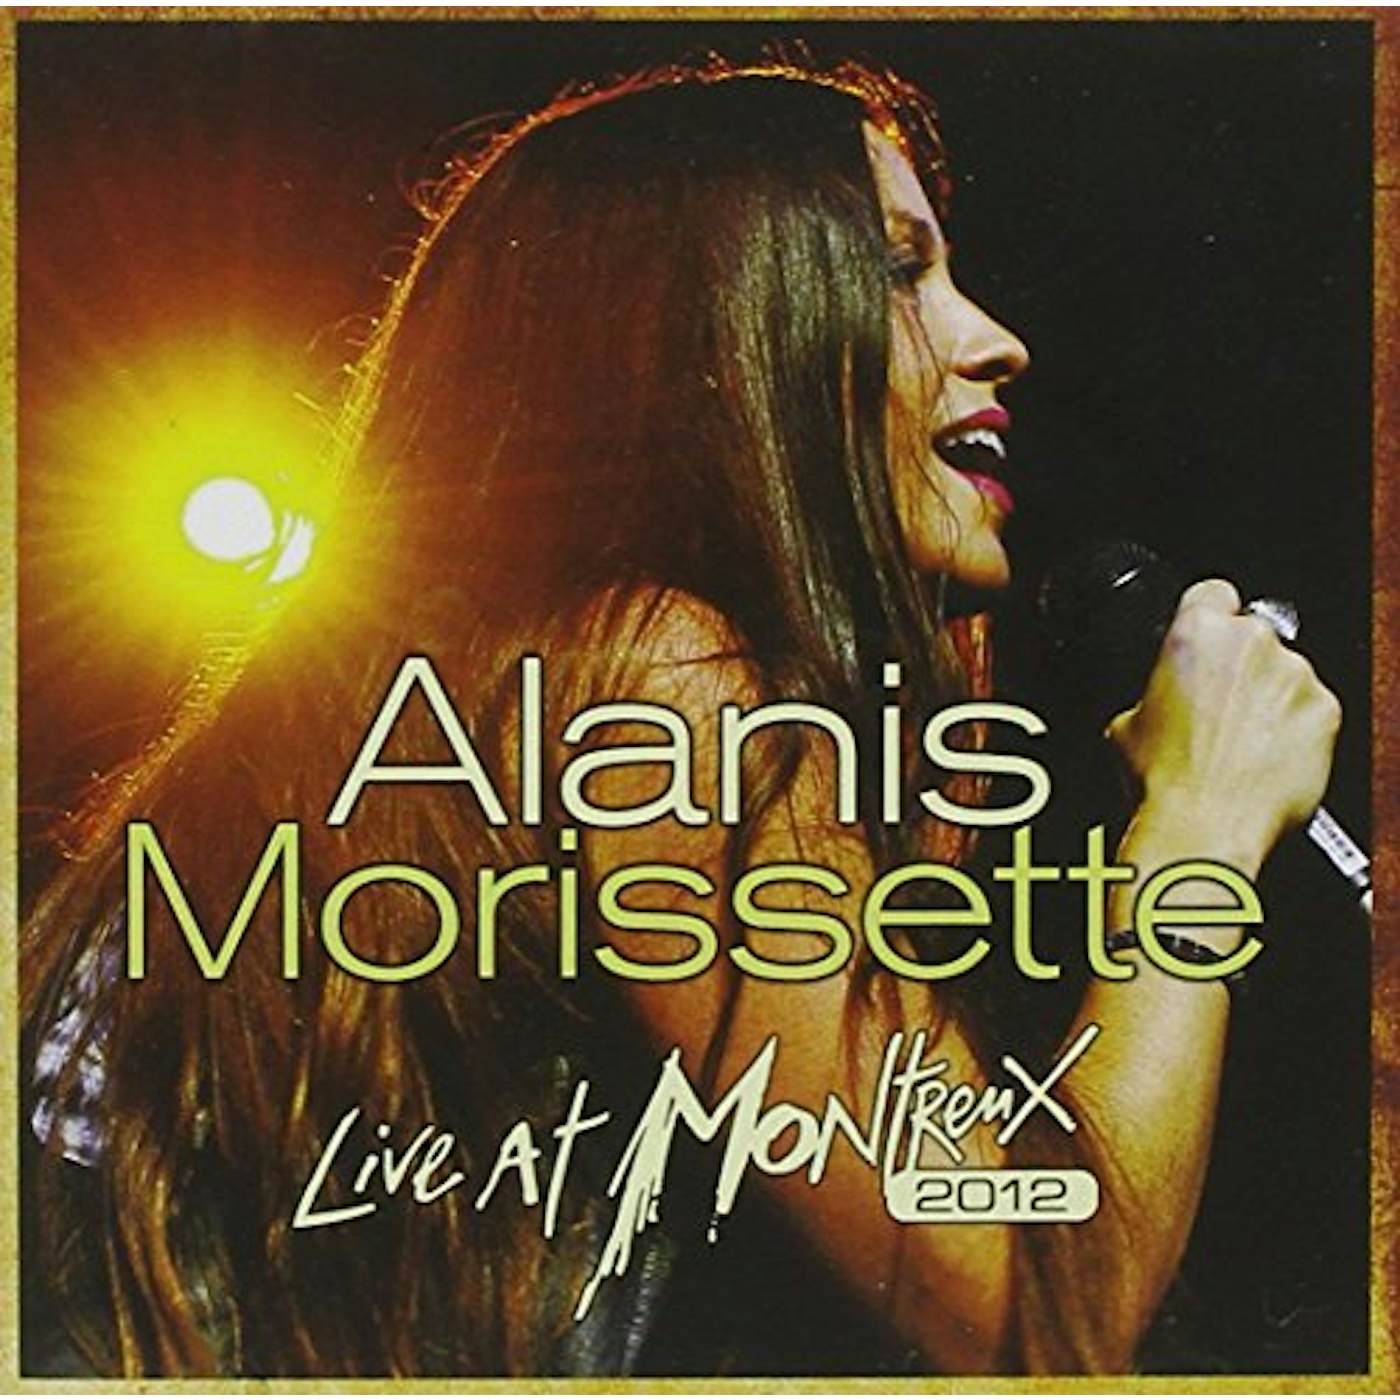 Alanis Morissette LIVE AT MONTREUX CD